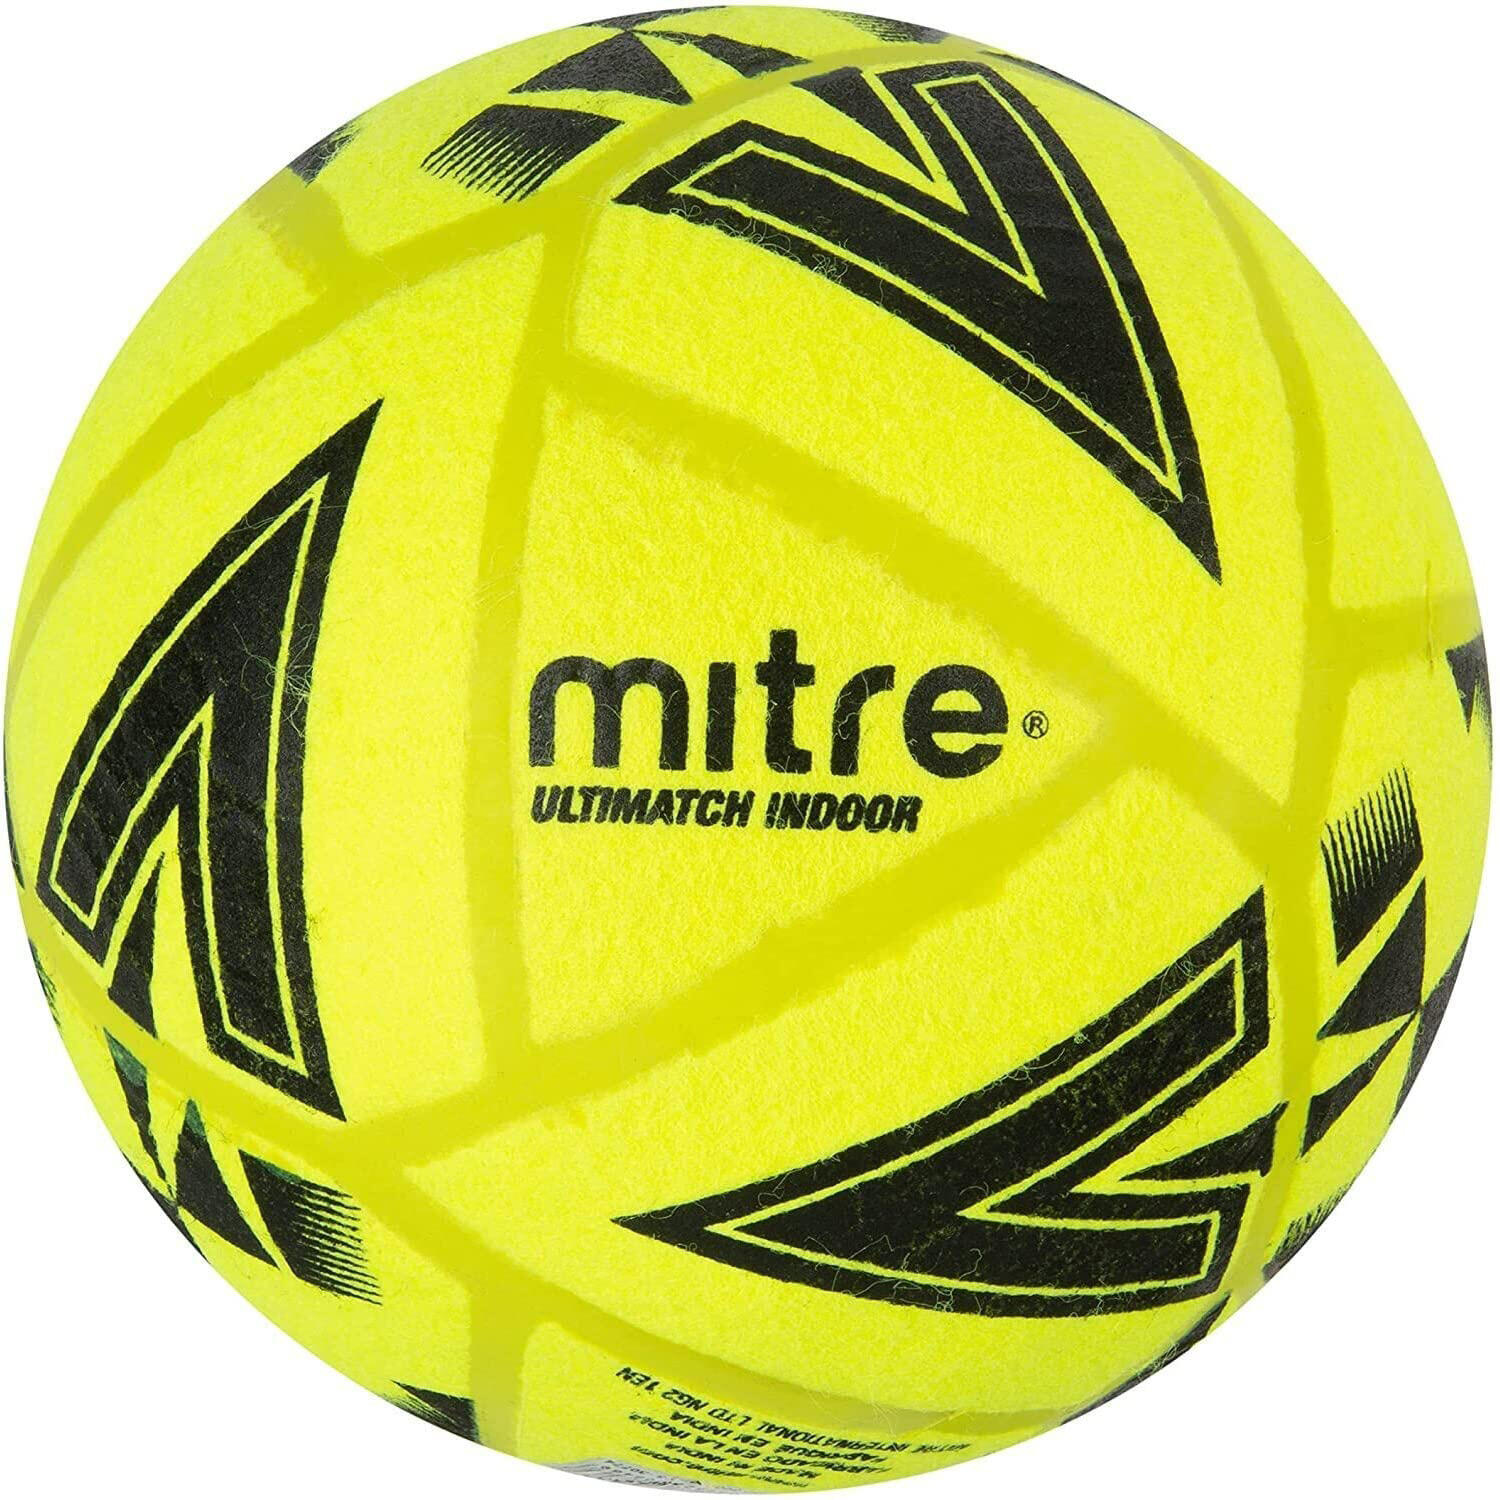 MITRE Ultimatch Indoor Football (Yellow/Black/Grey)